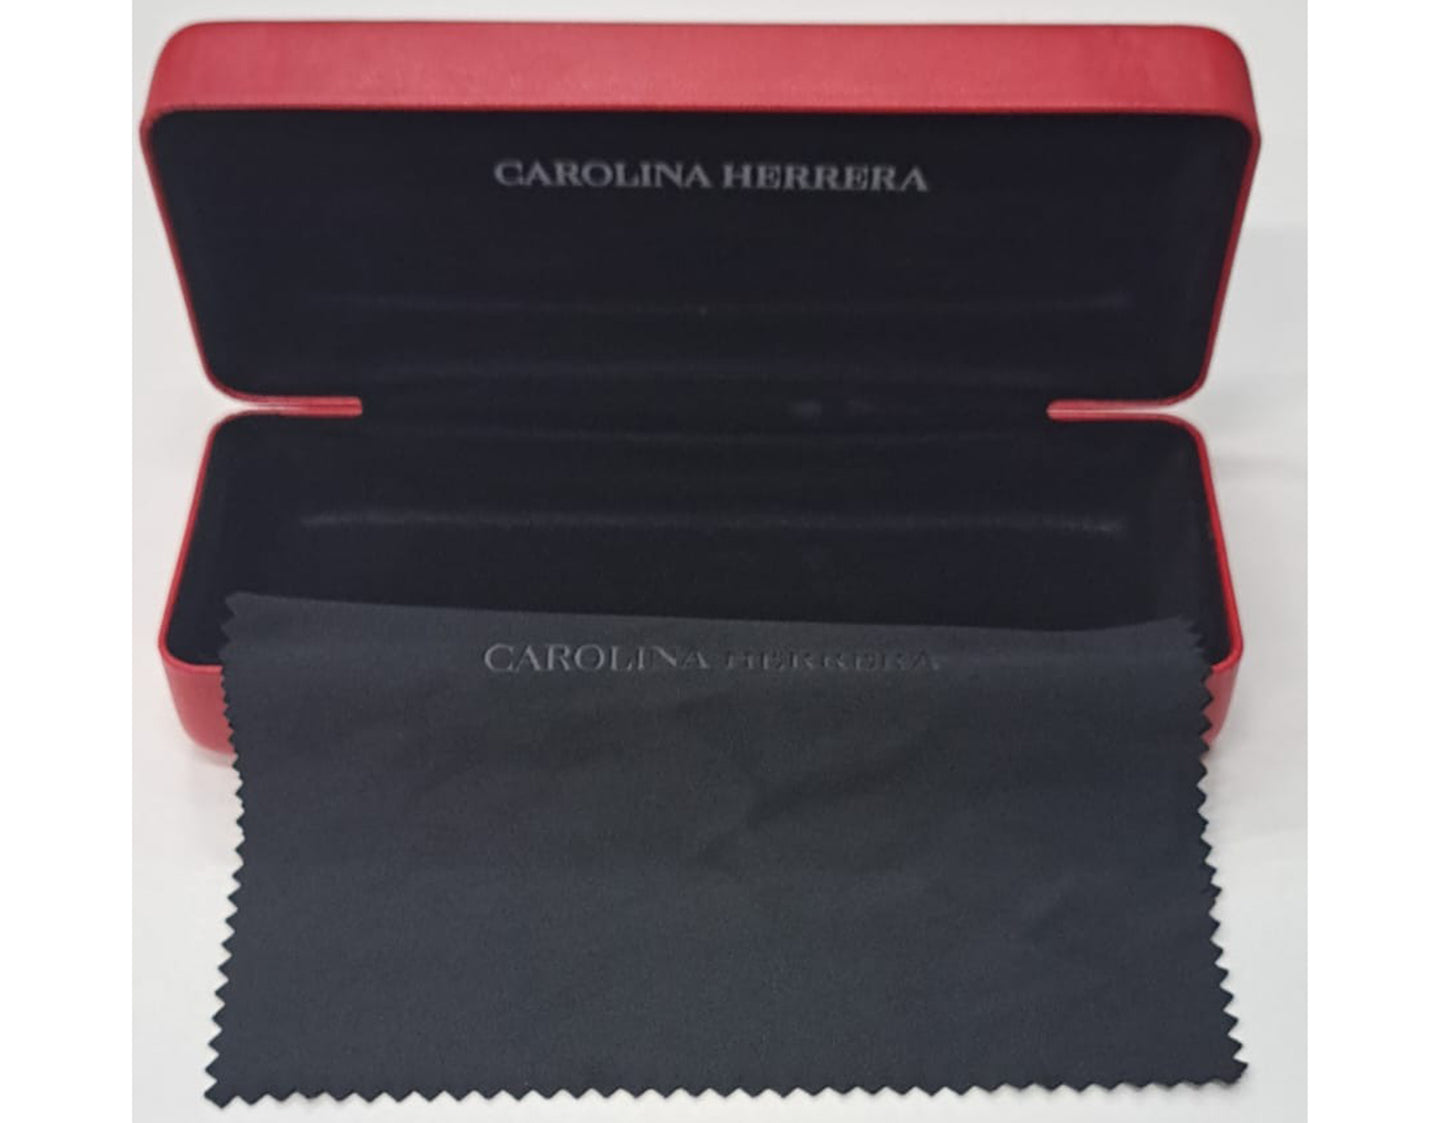 Carolina Herrera VHE878-08LA-53 53mm New Eyeglasses